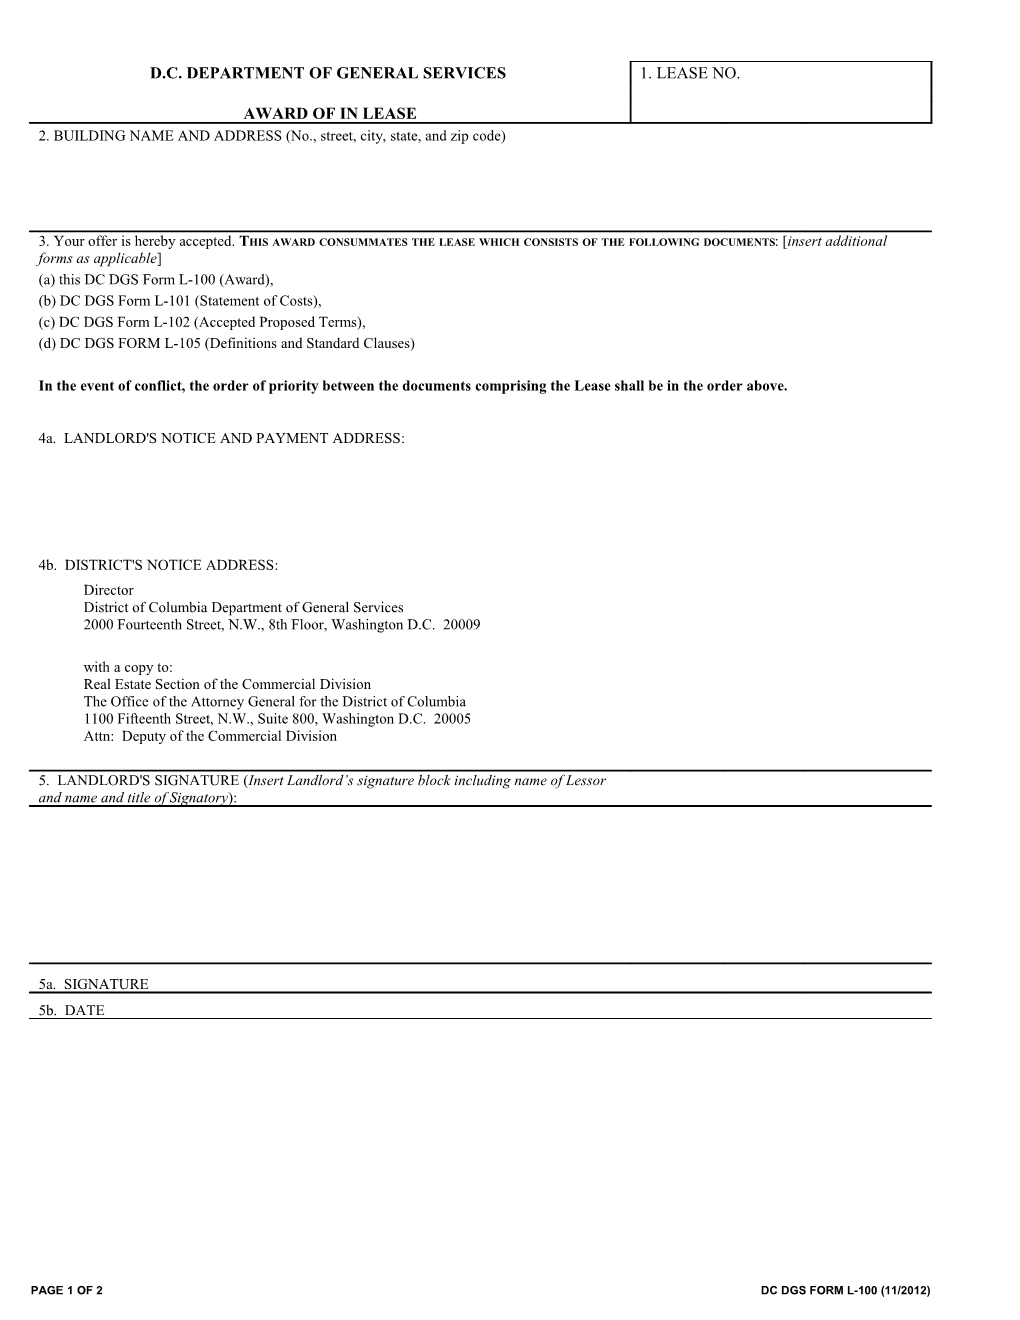 Page 1 of 2 Dc Dgs Form L-100 (11/2012)